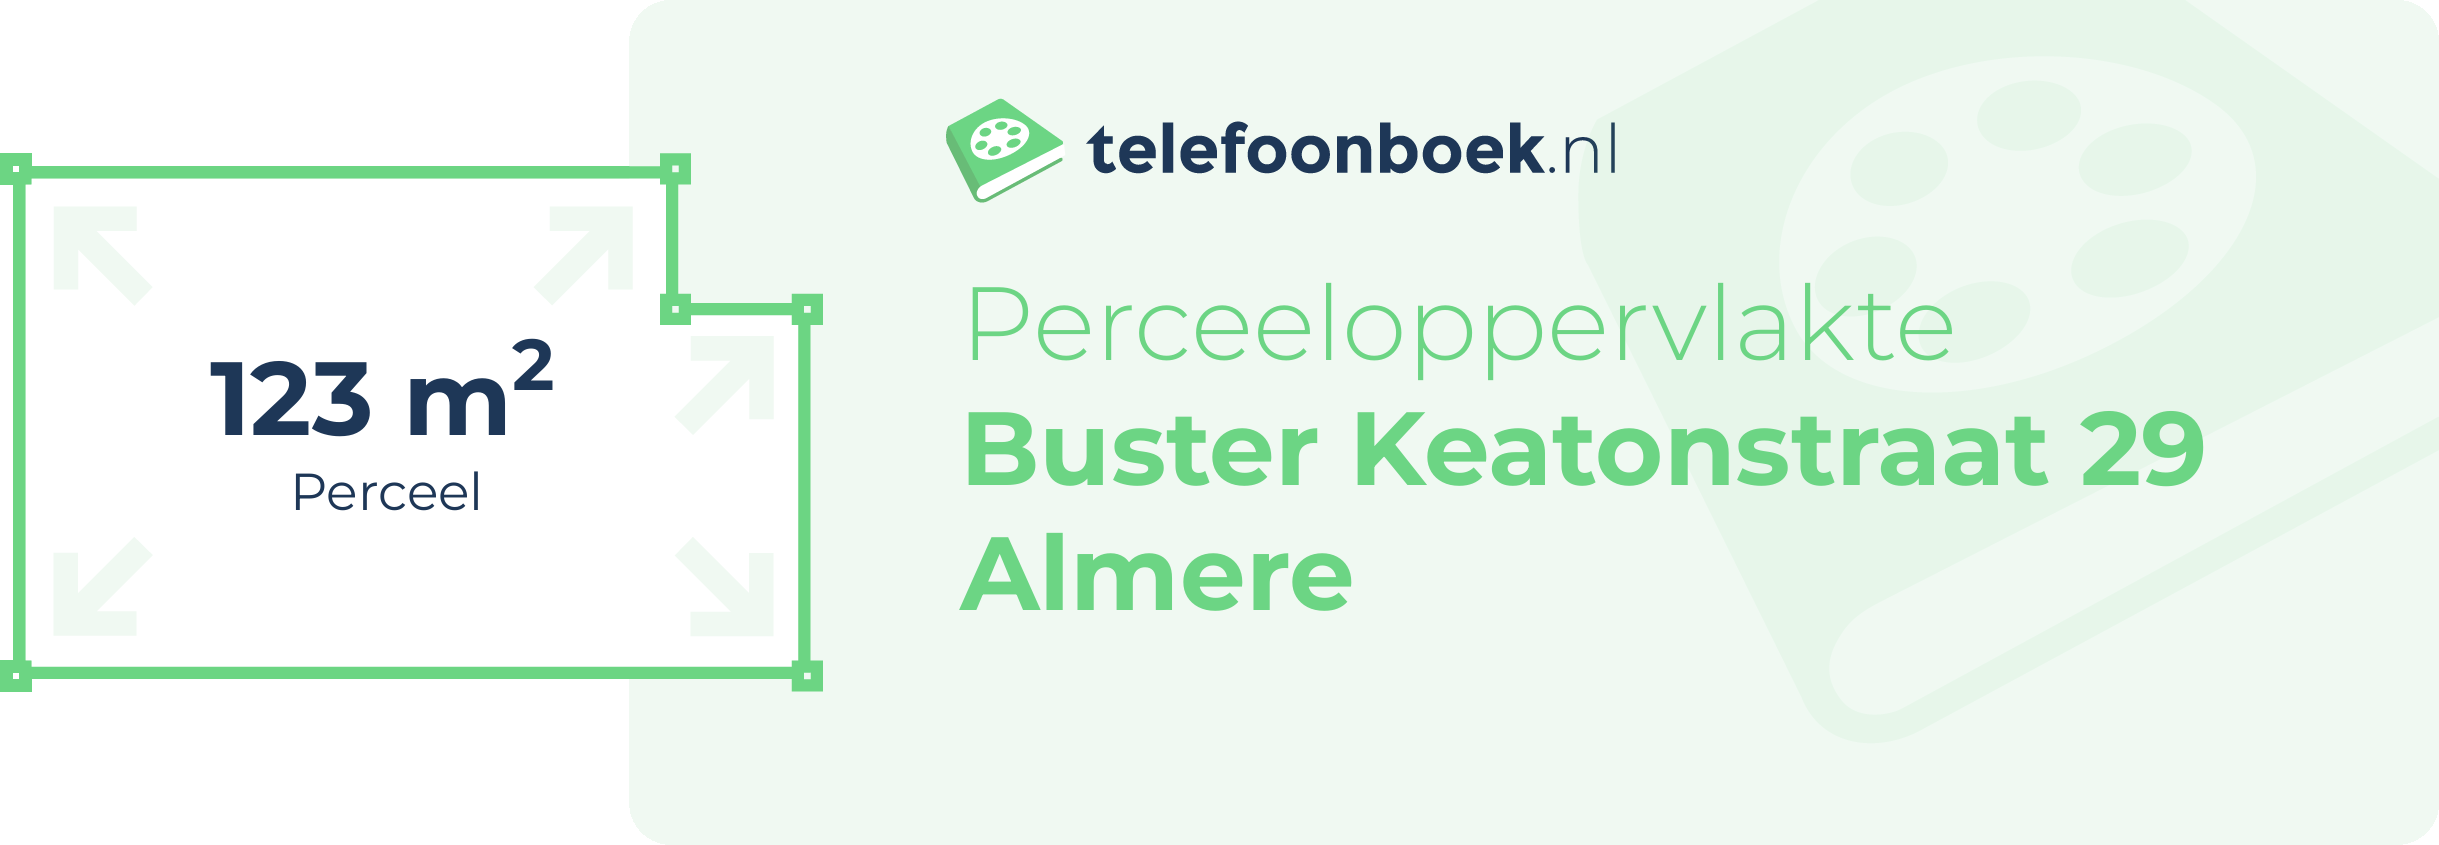 Perceeloppervlakte Buster Keatonstraat 29 Almere